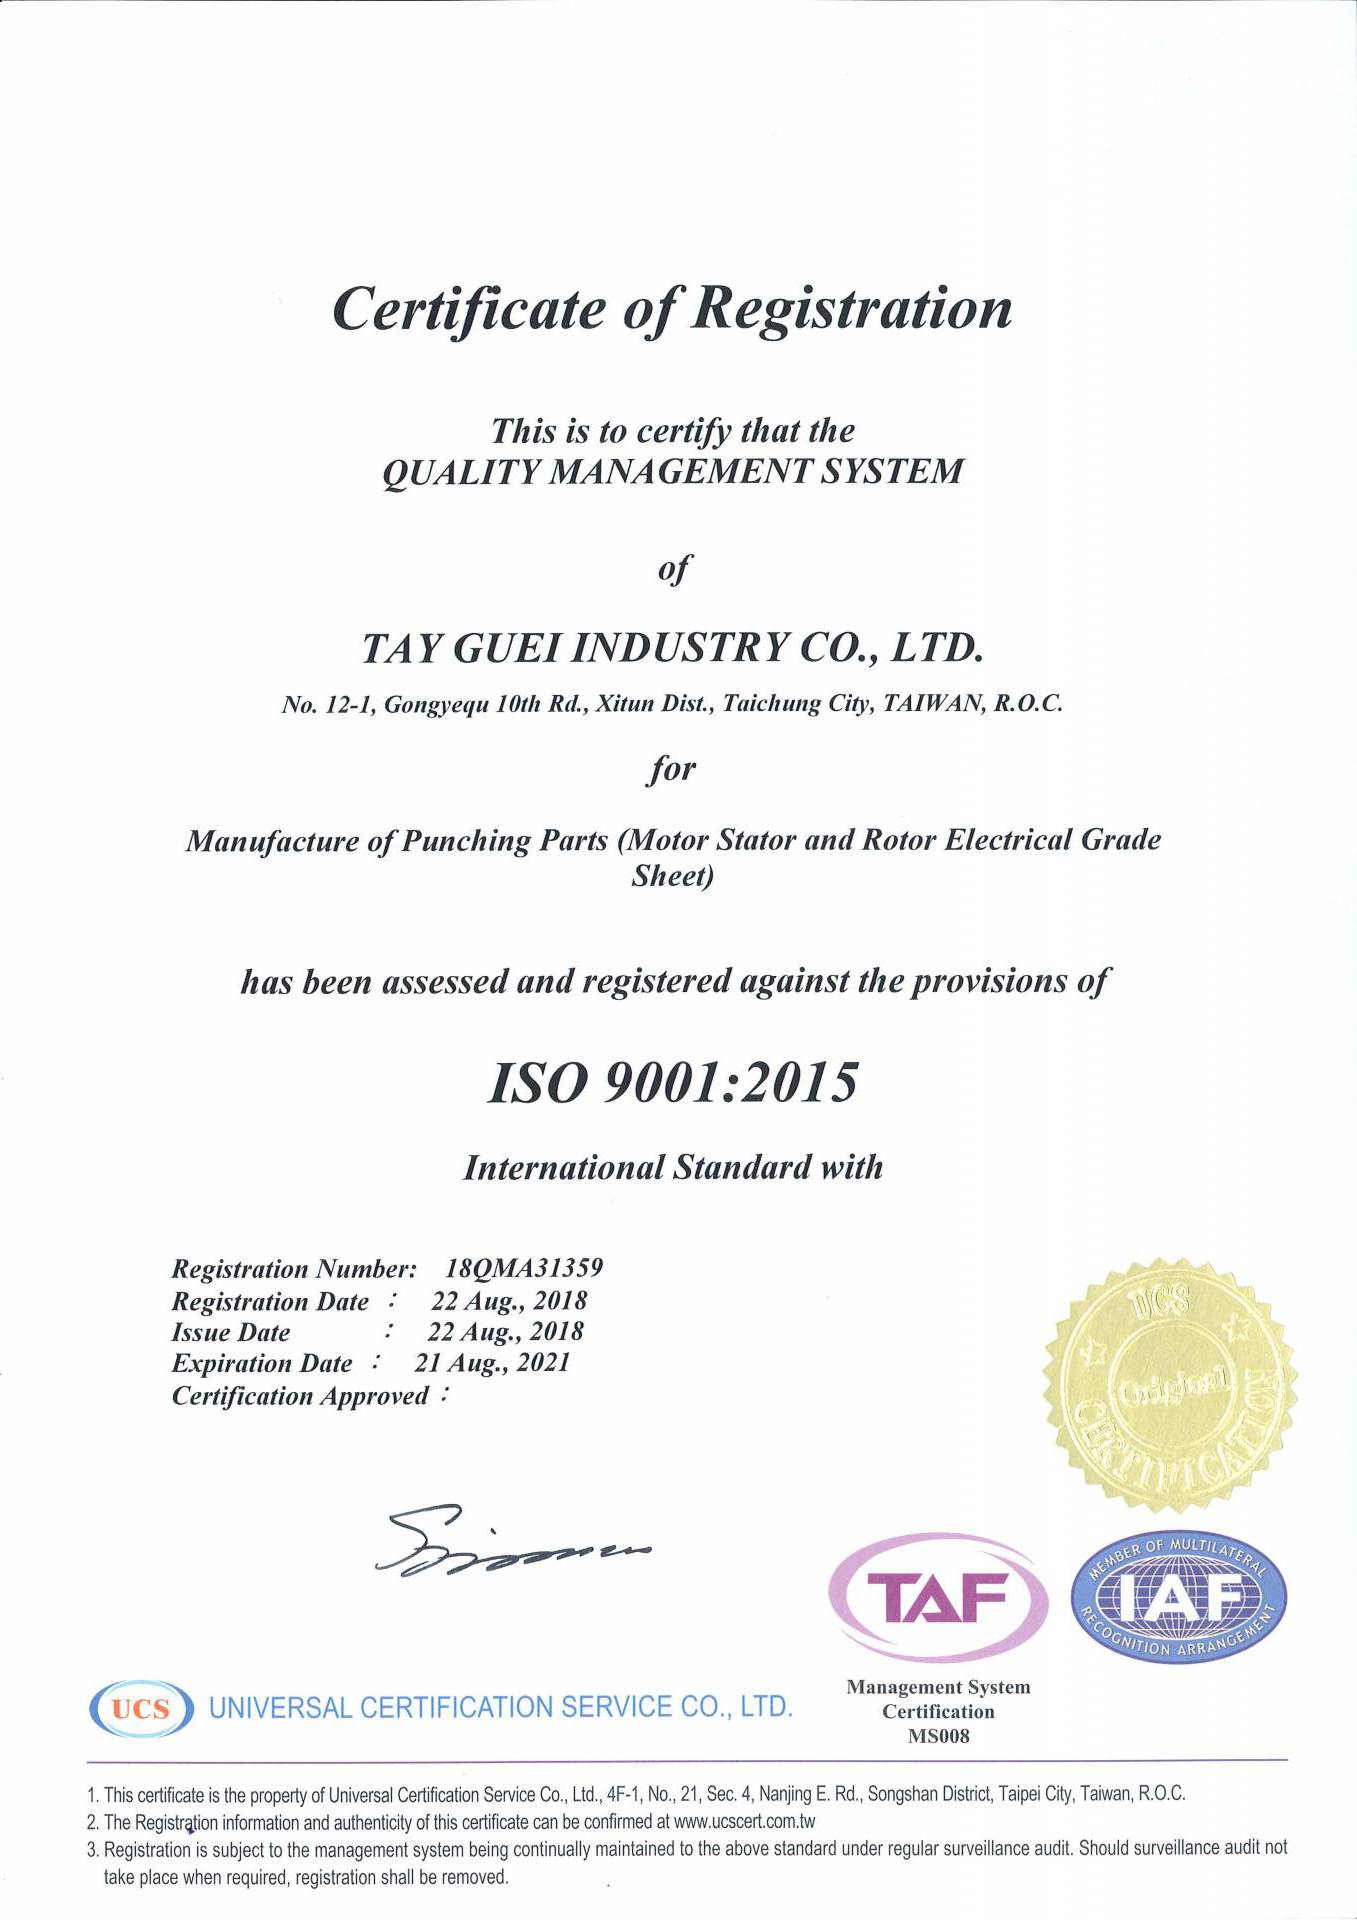 Certificare ISO